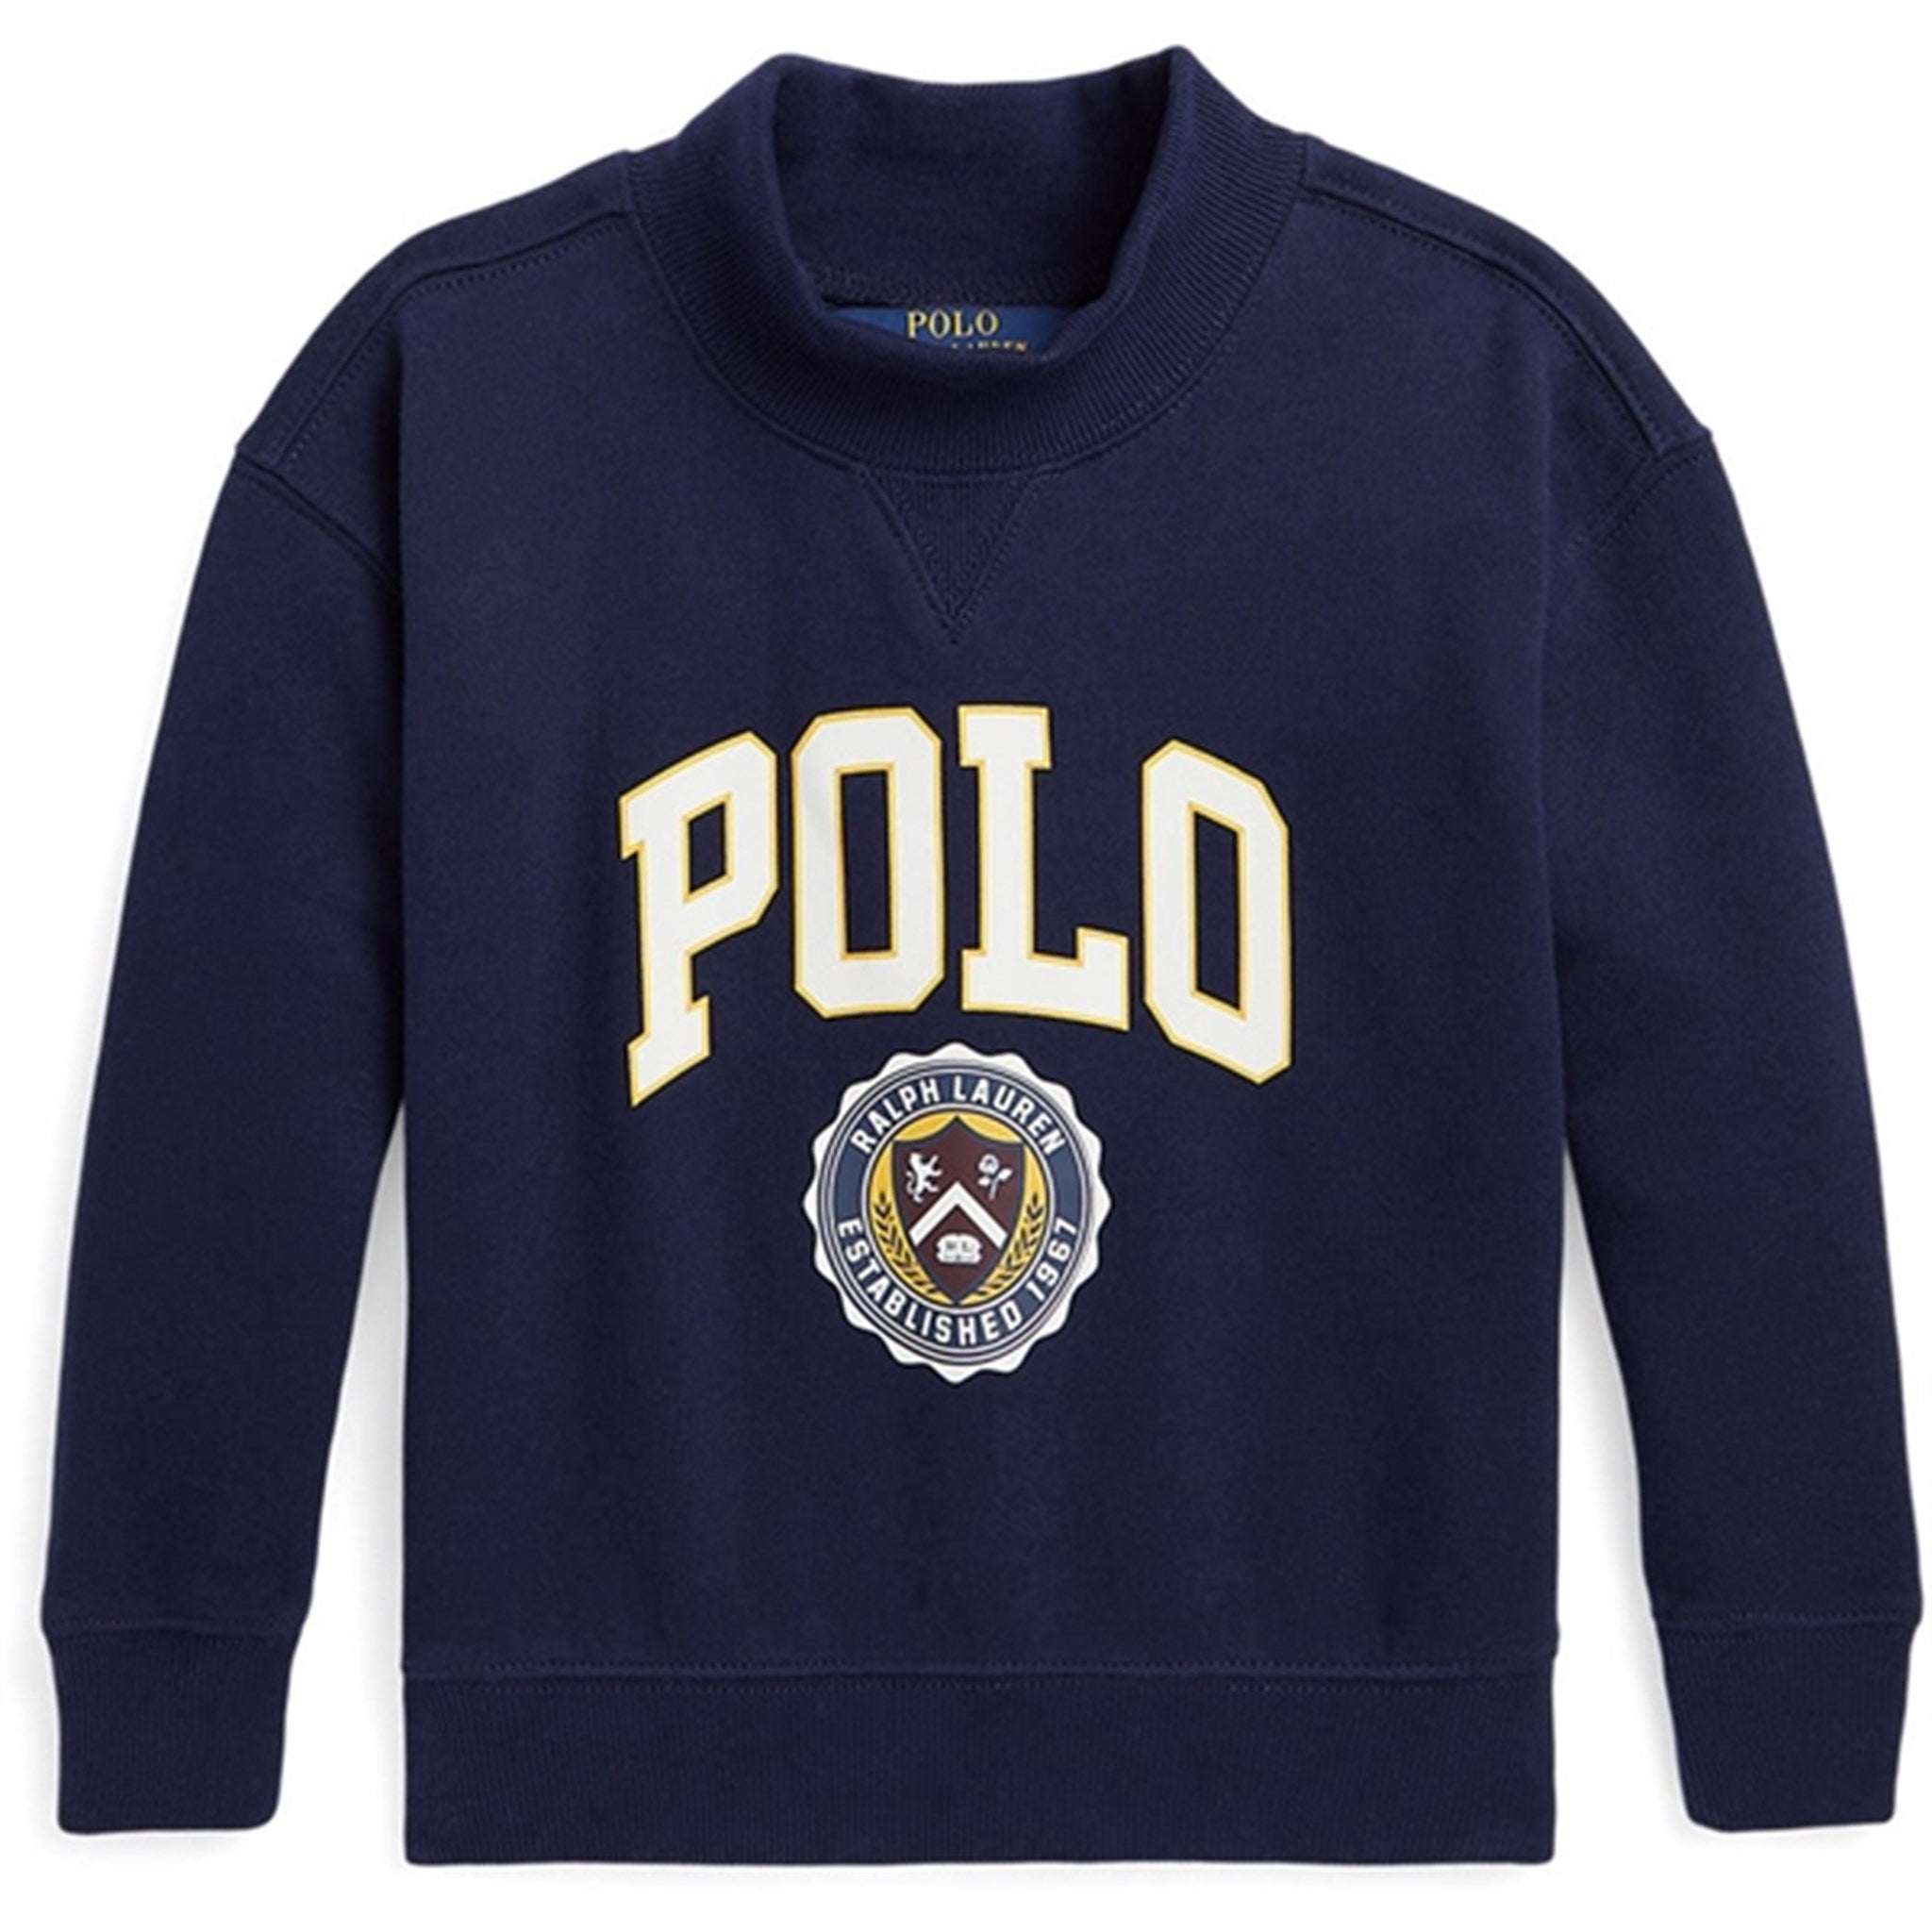 Polo Ralph Lauren Girl Varsity Sweatshirt Refined Navy - Str. S/7 år